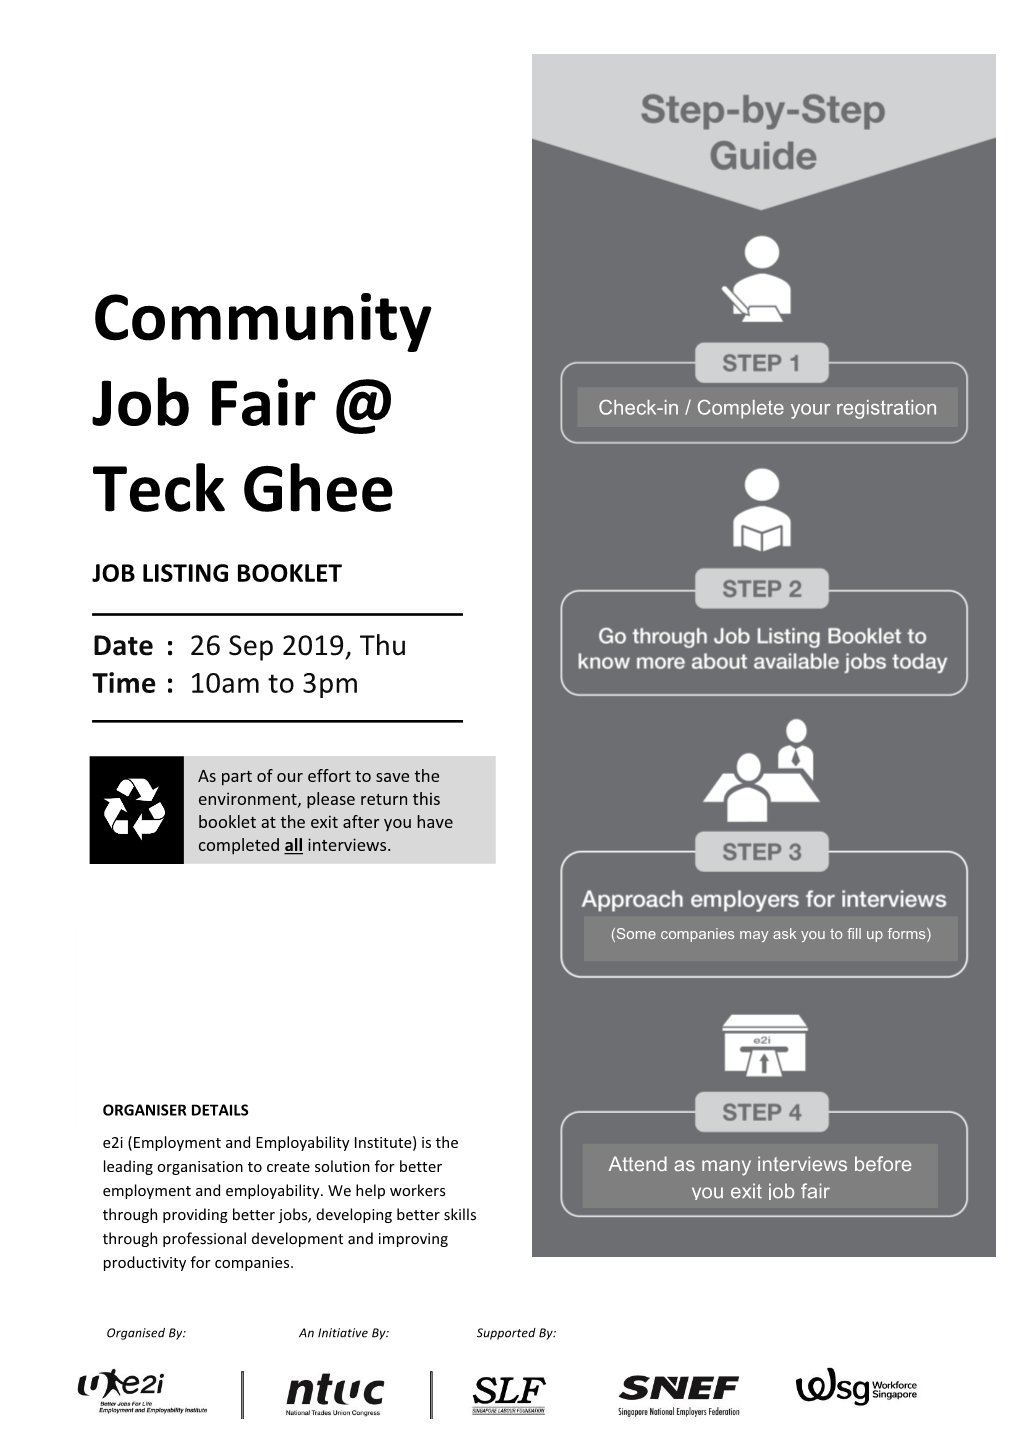 Community Job Fair @ Teck Ghee